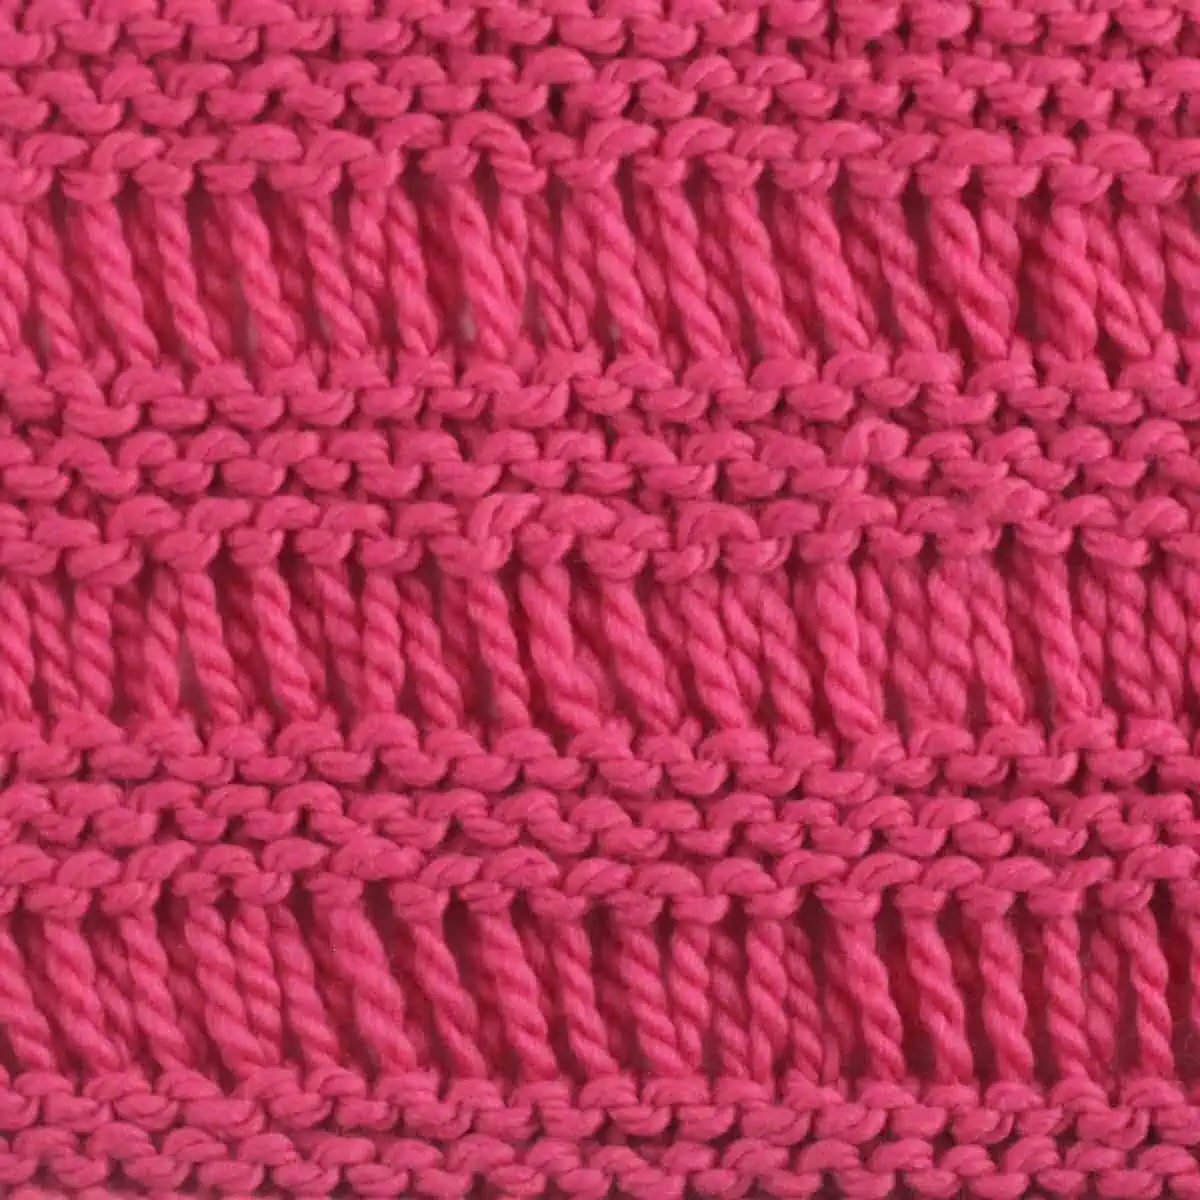 Garter Drop Stitch knitting pattern in bright pink yarn color.